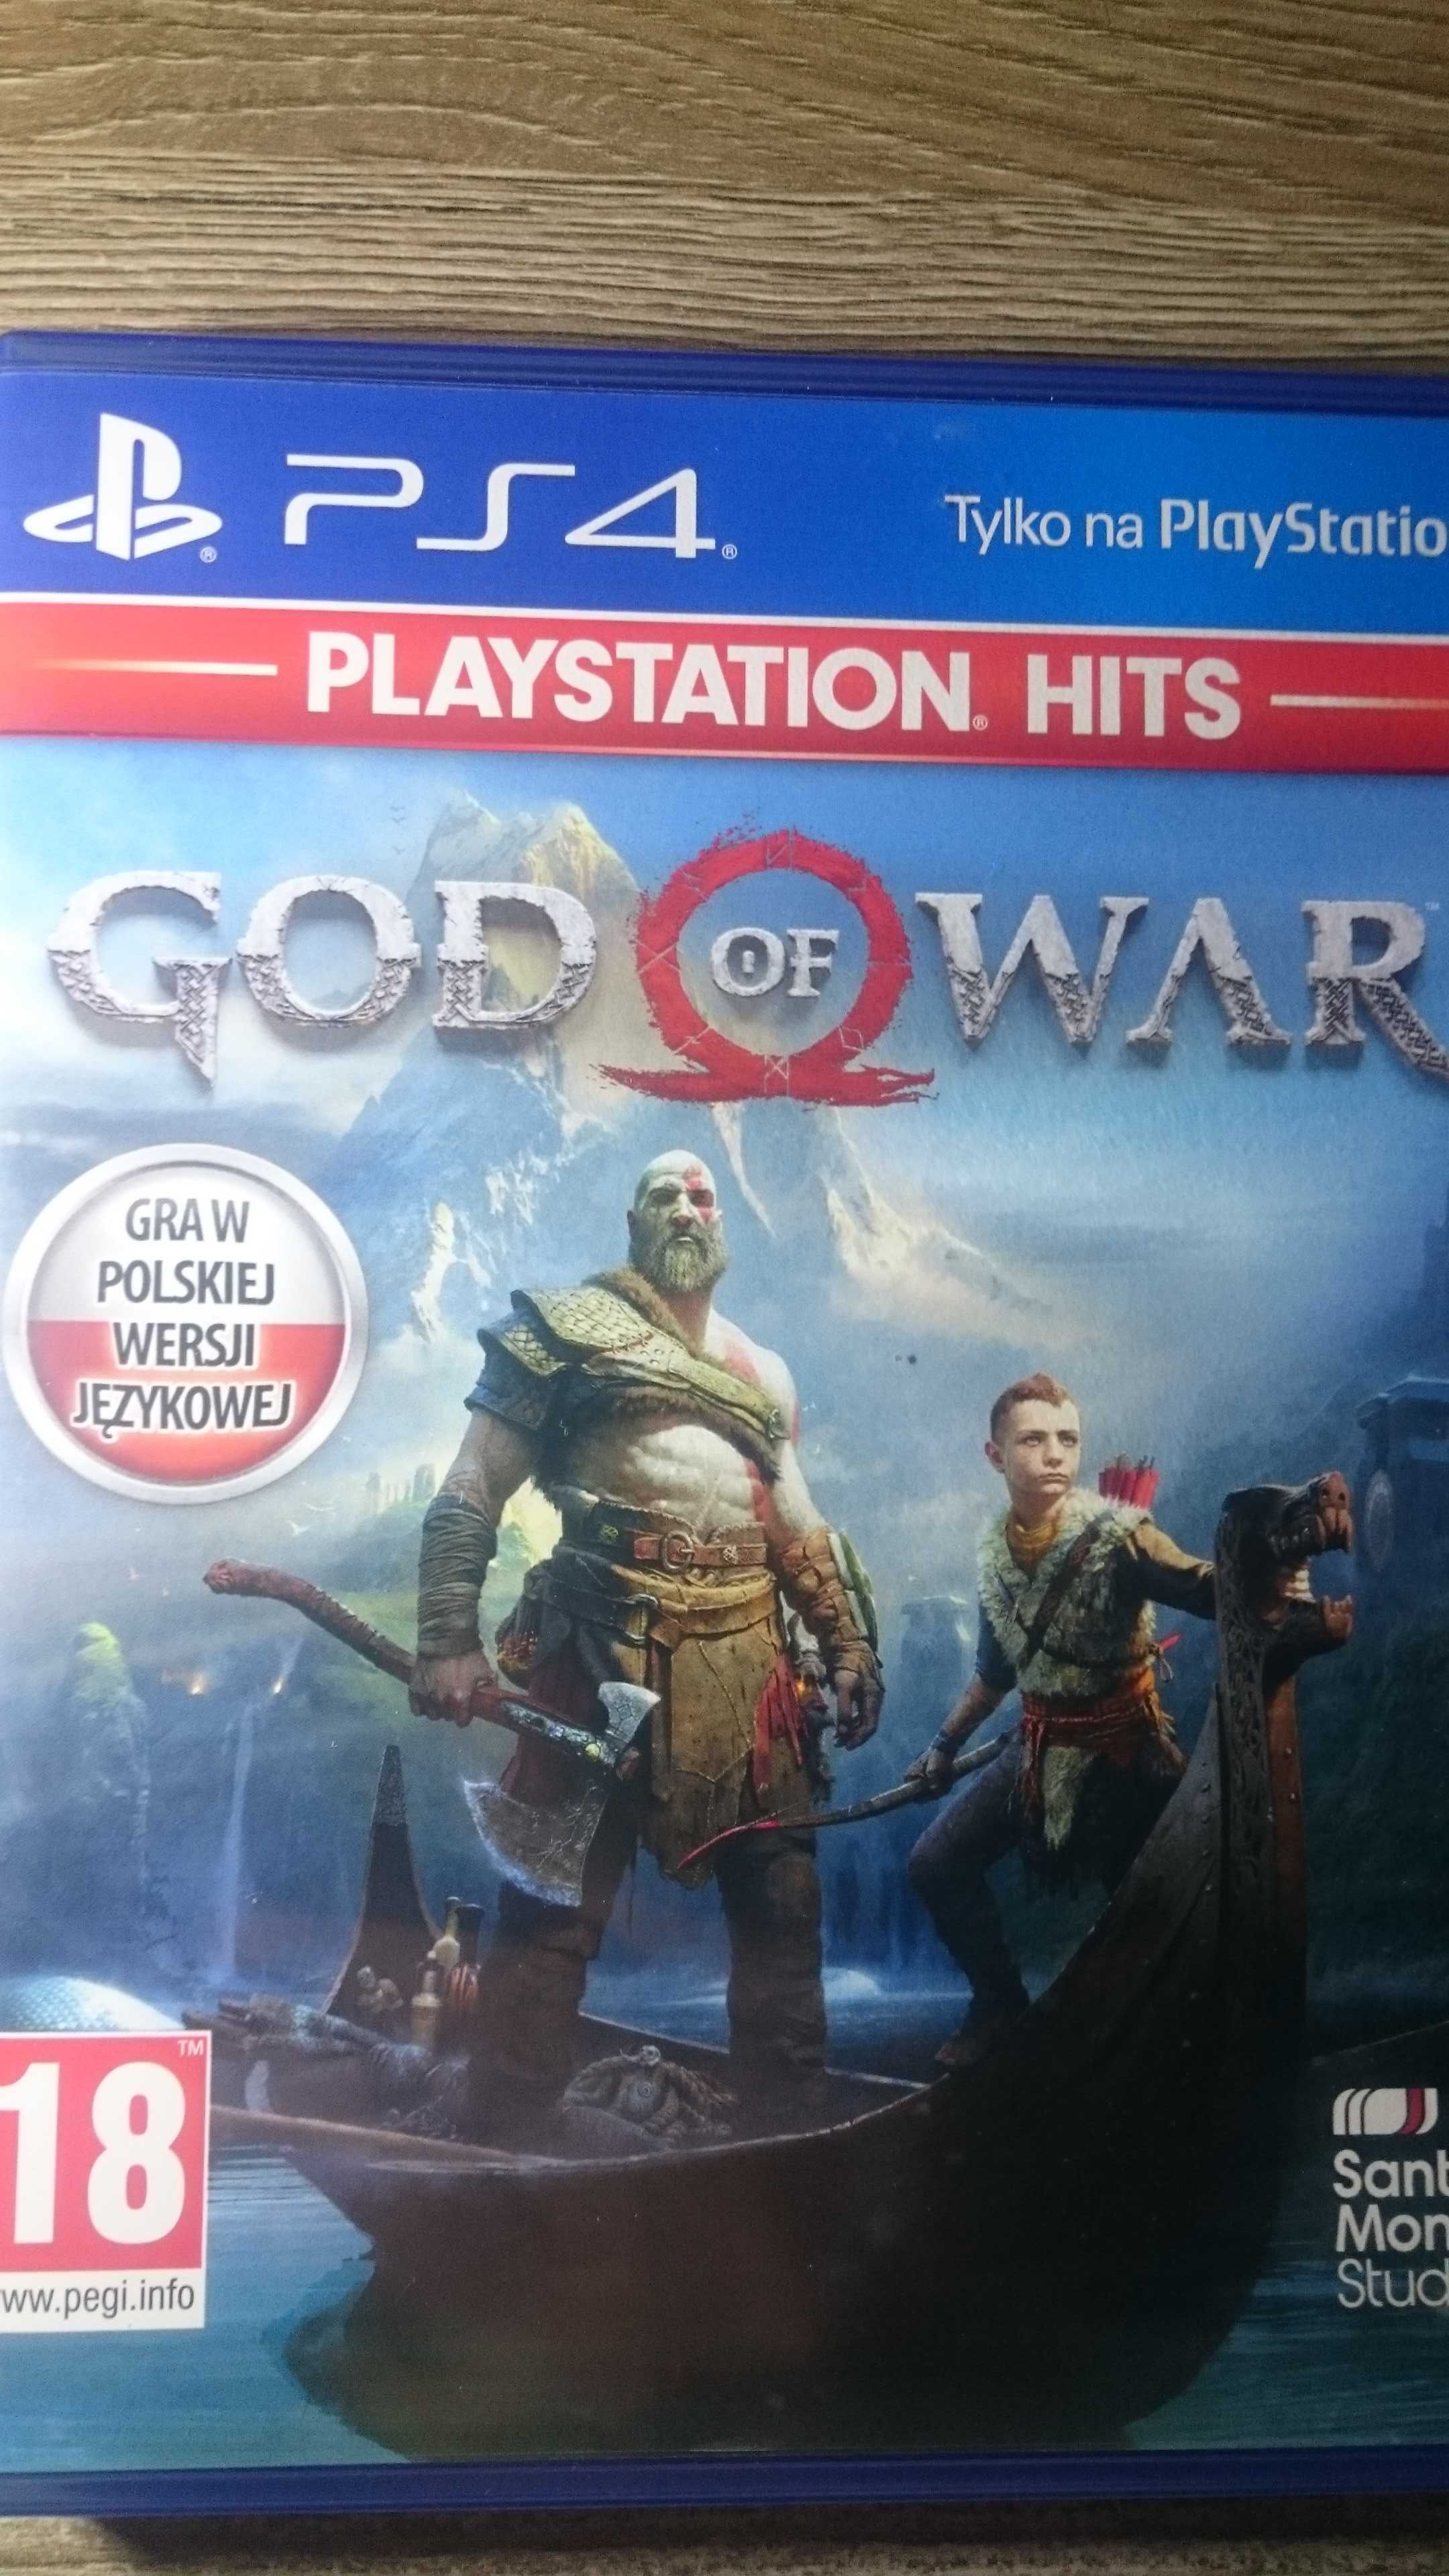 Gra God of War ps4 POLSKA playstation 4 last of us Wiedźmin assassins